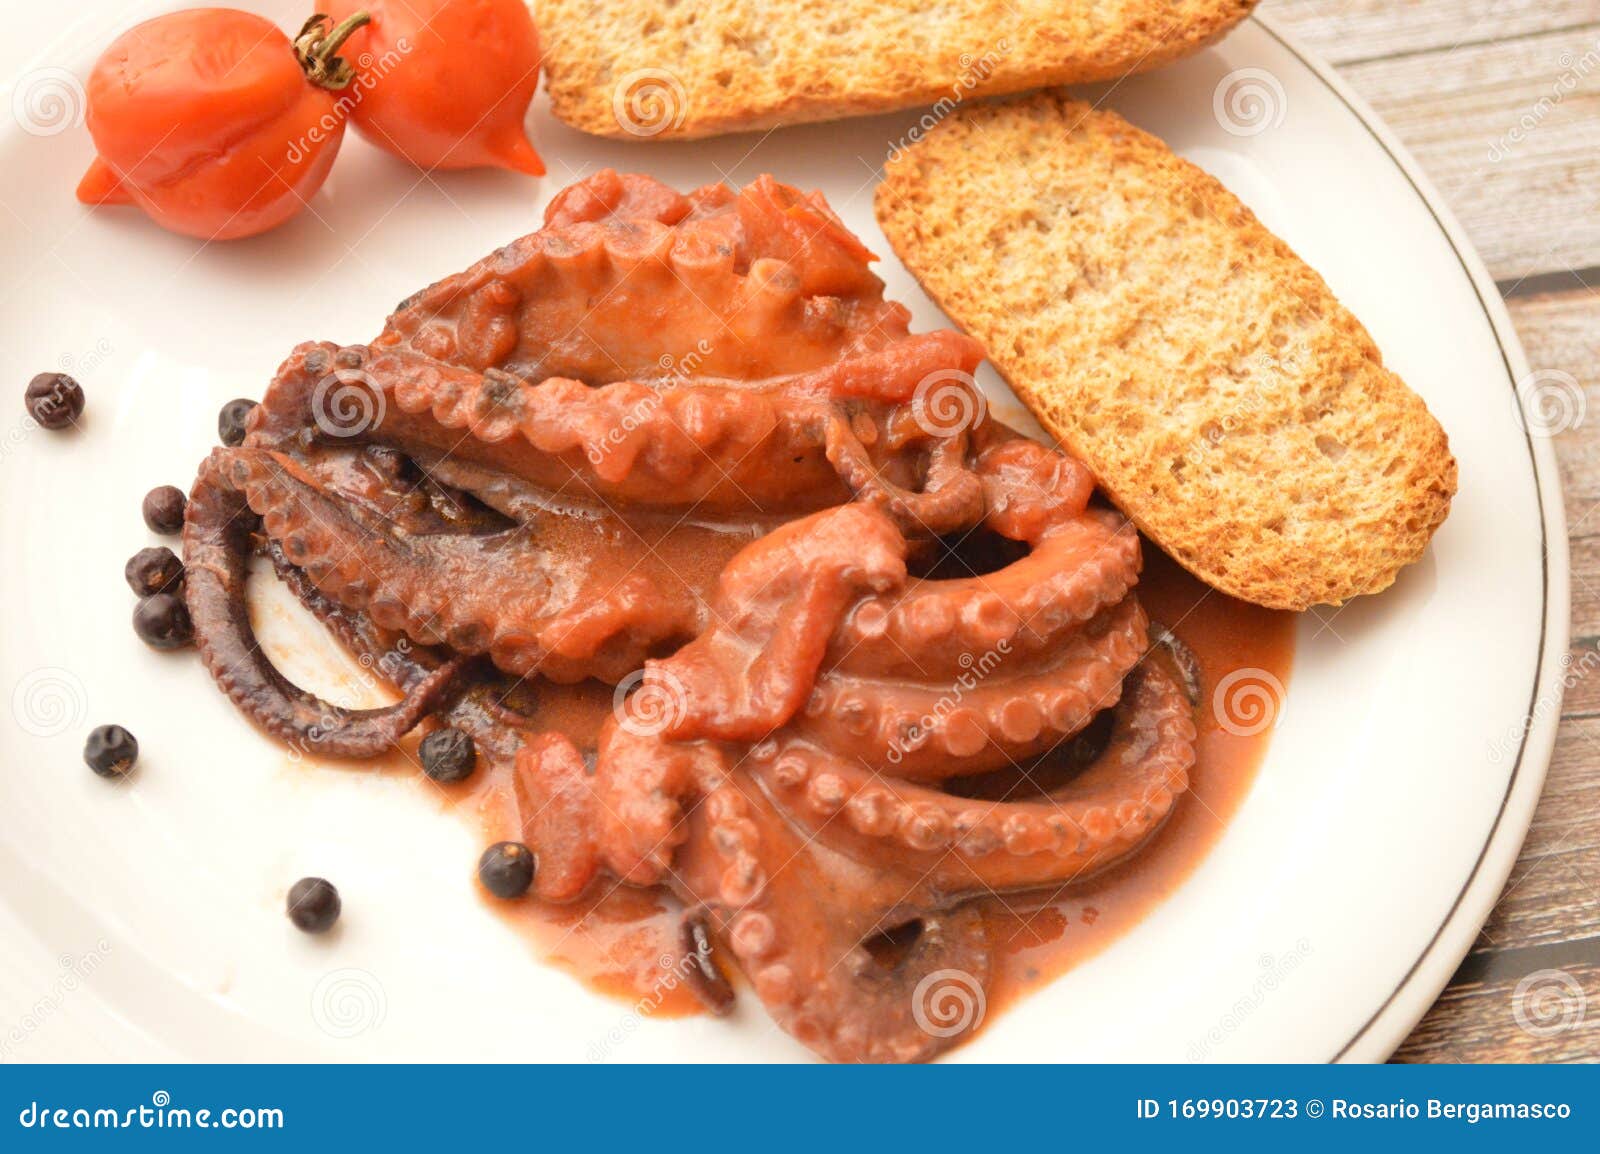 traditional italian dish octopus luciana with tomato